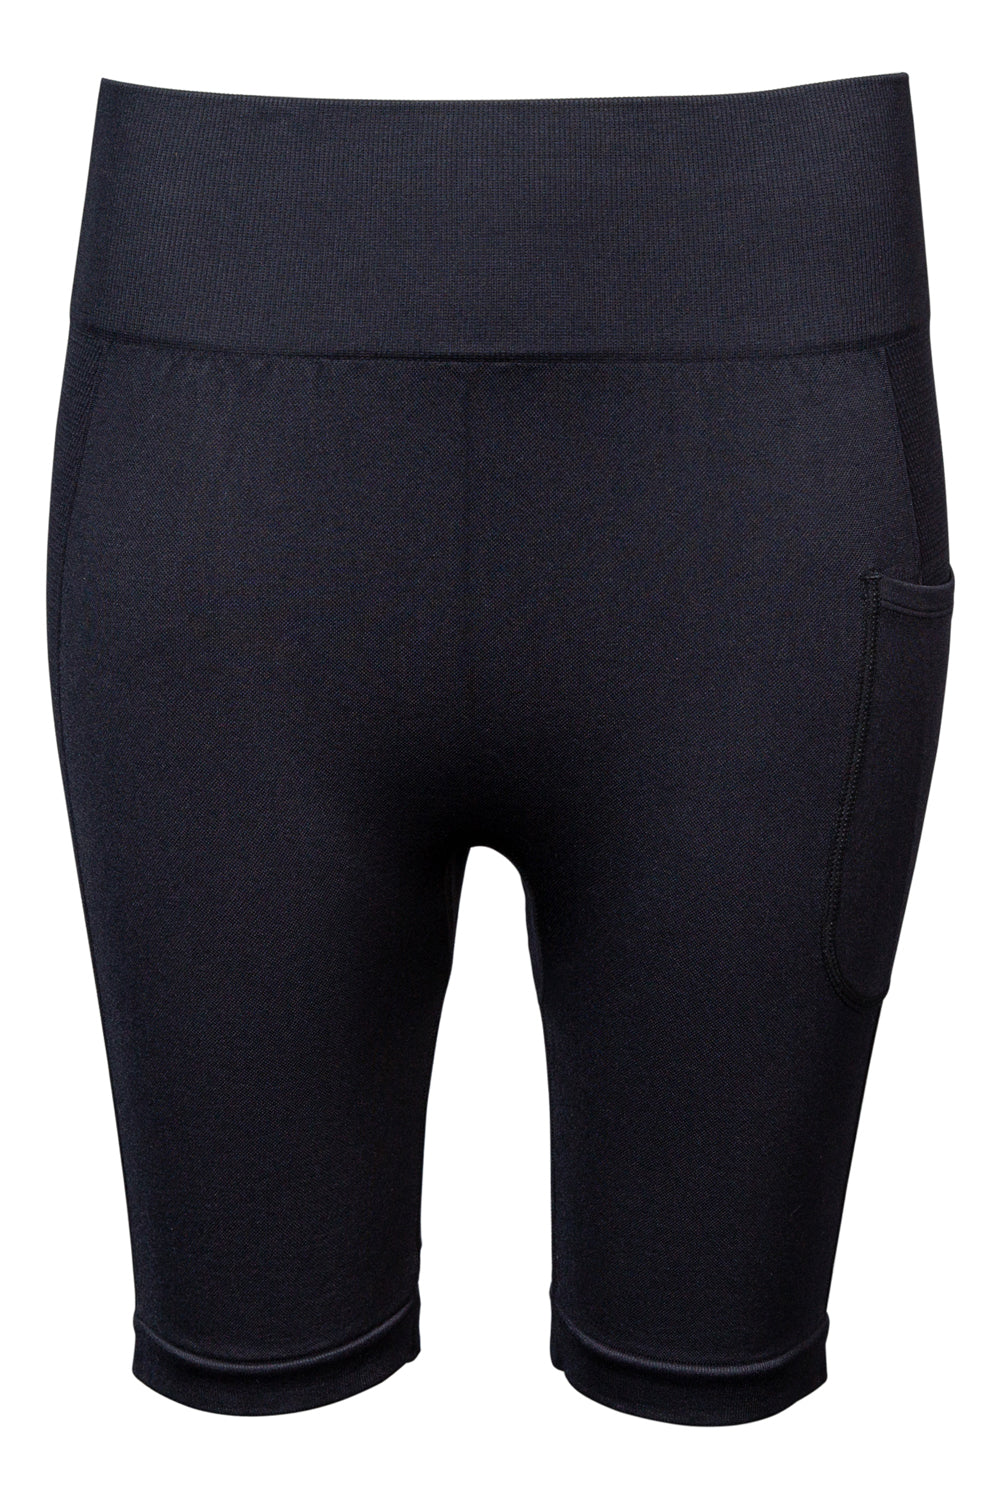 Sundried Women's Seamless Cycling Shorts Shorts XL Black SD0361 XL Black Activewear